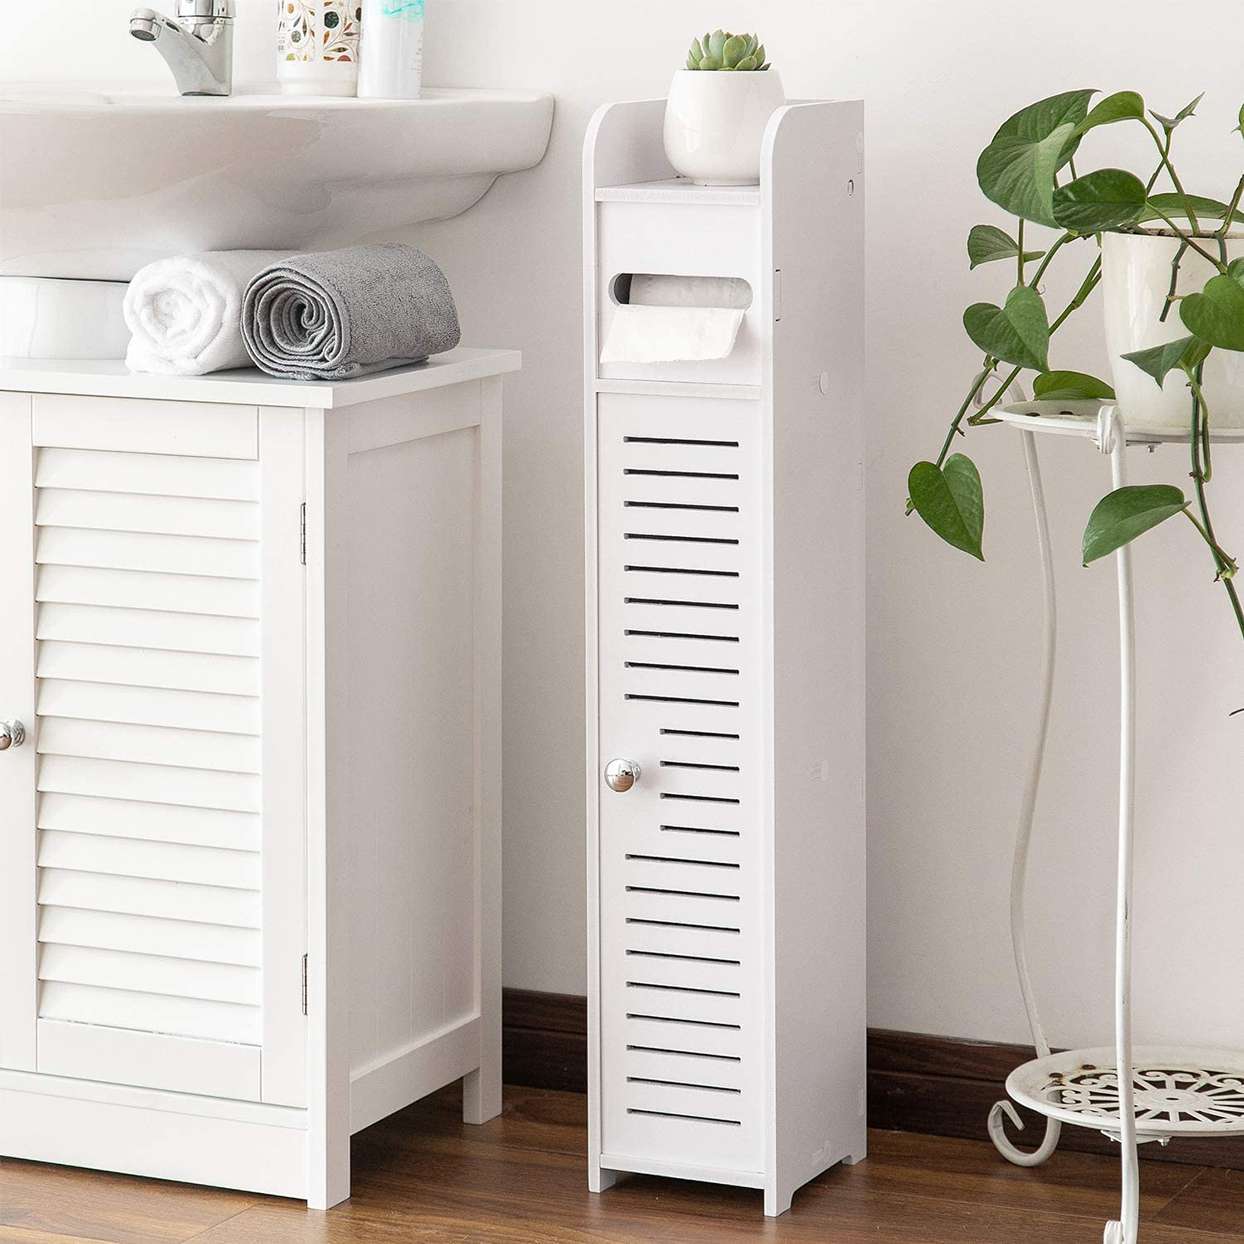 White Bathroom Wall Cabinet With Door Shelves Drawer Storage Cupboard Organizer 